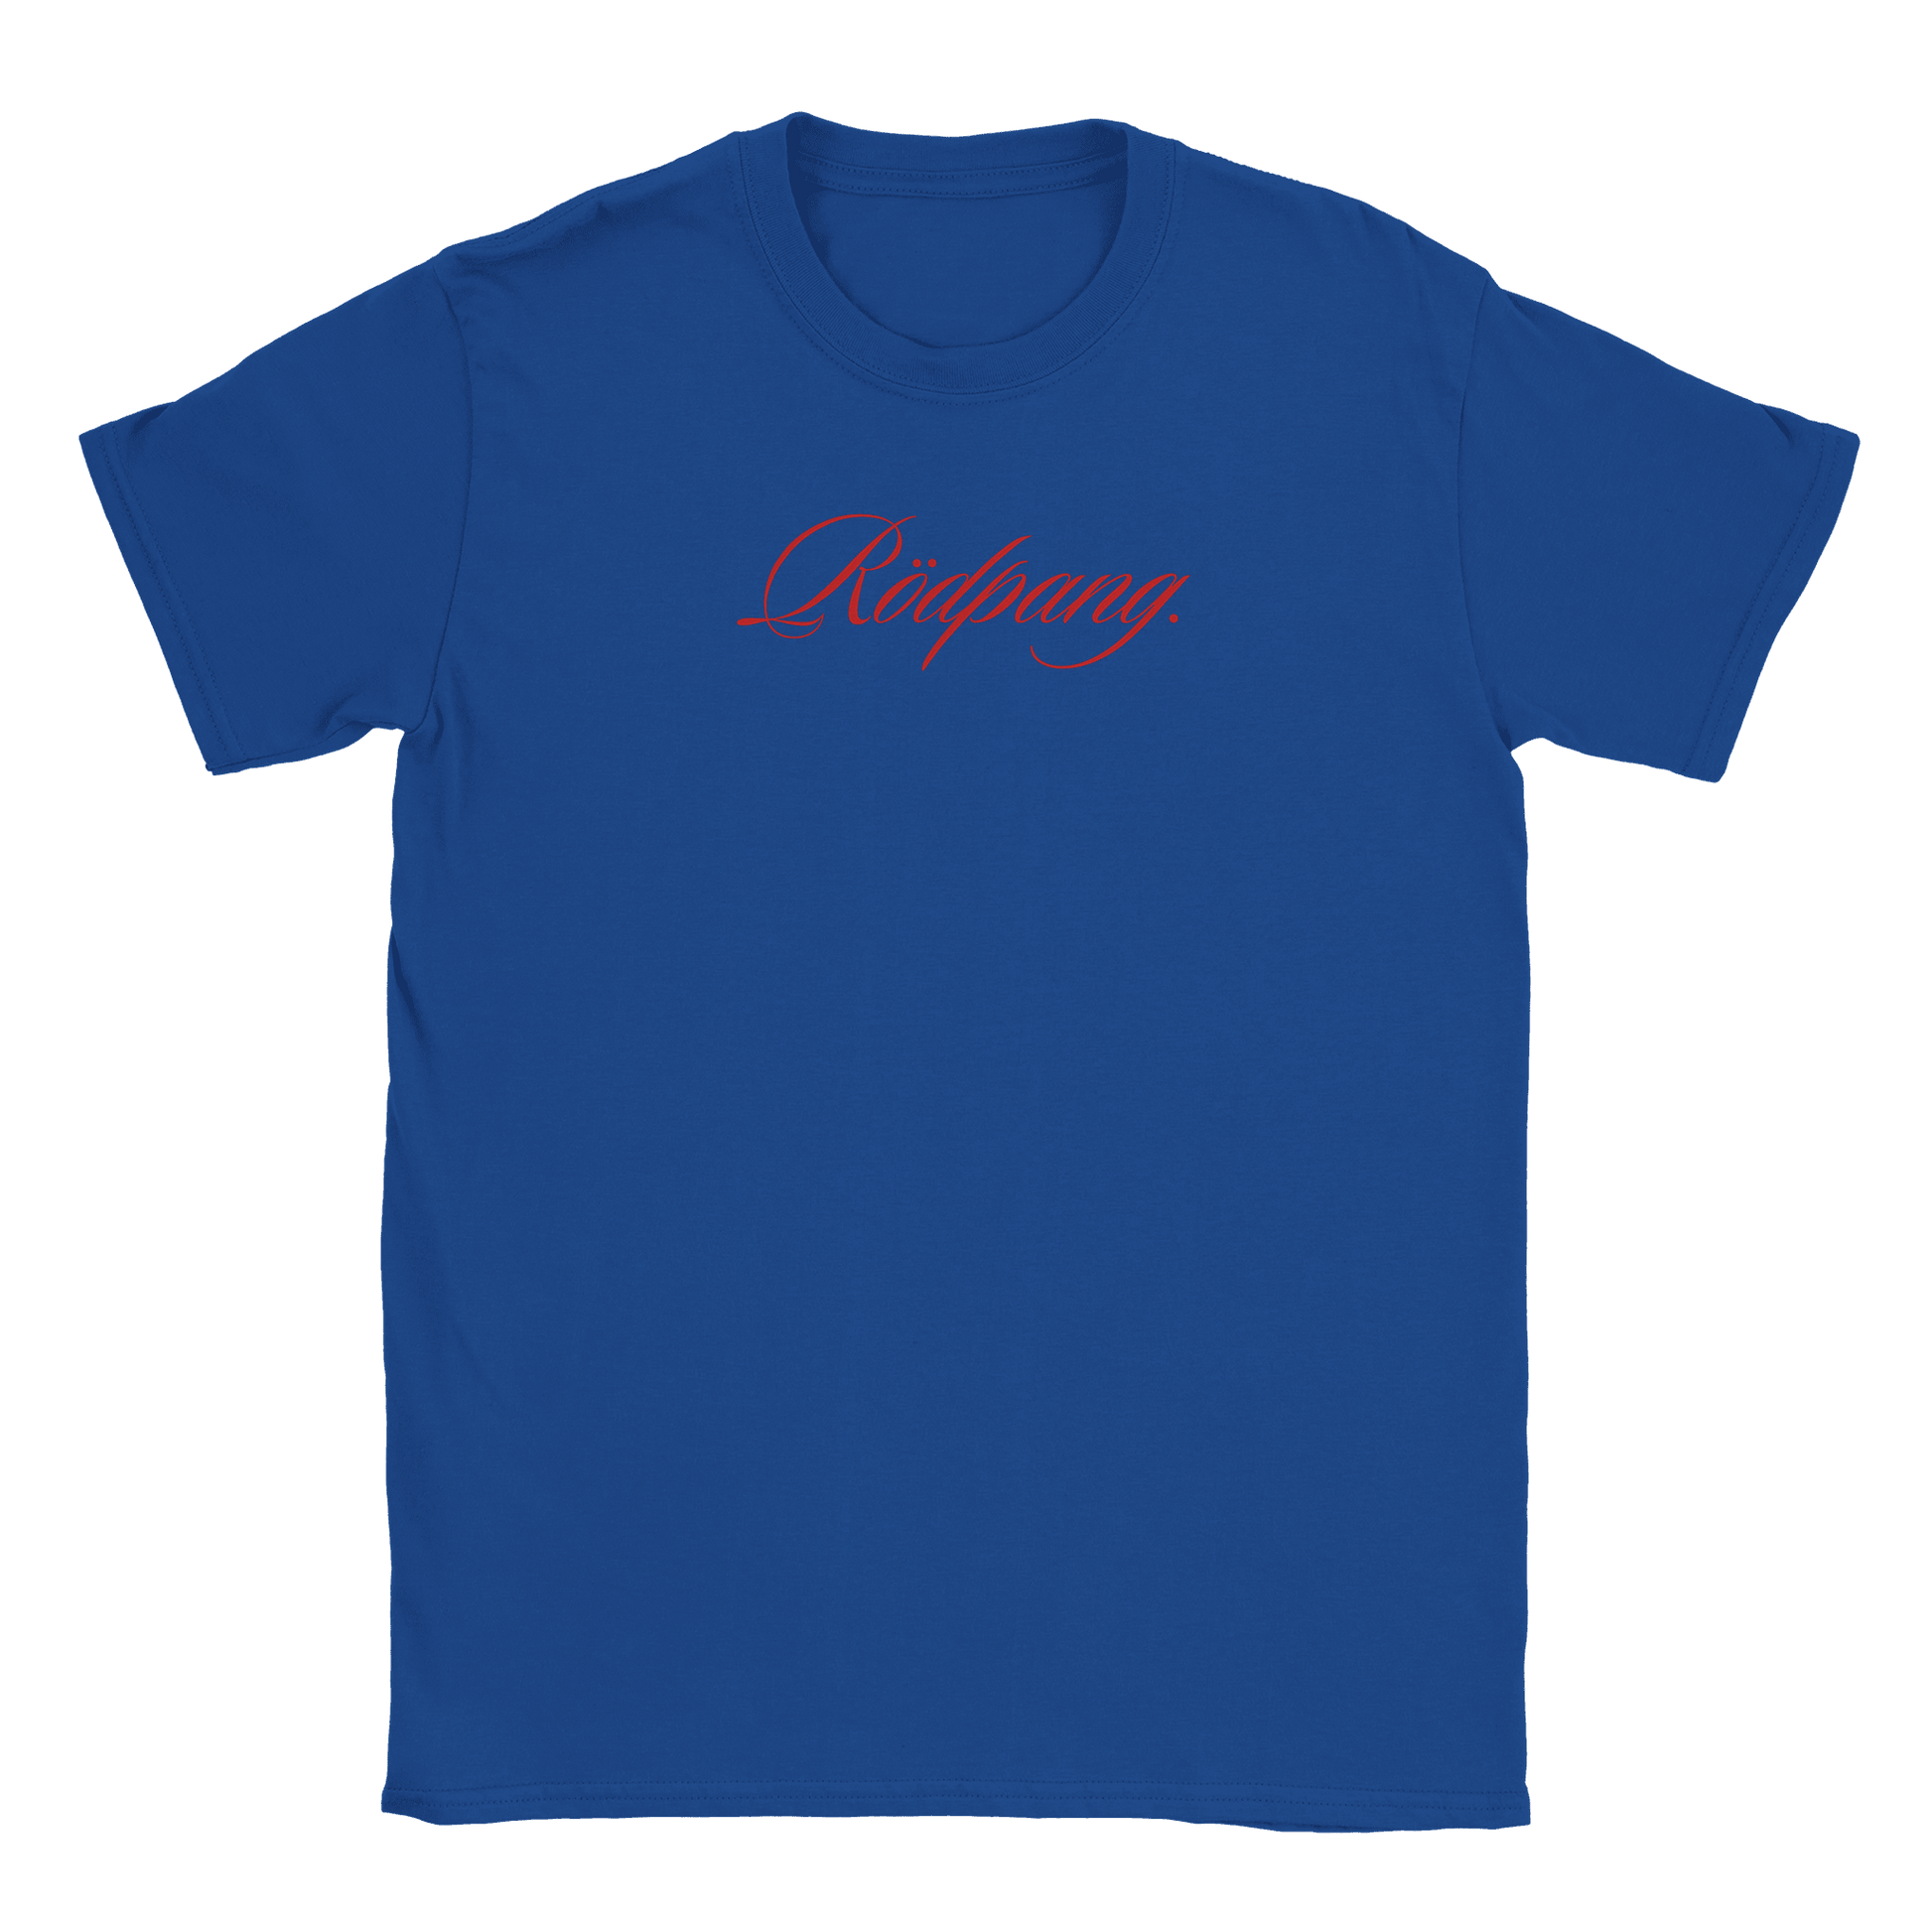 Rödpang - T-shirt Blå